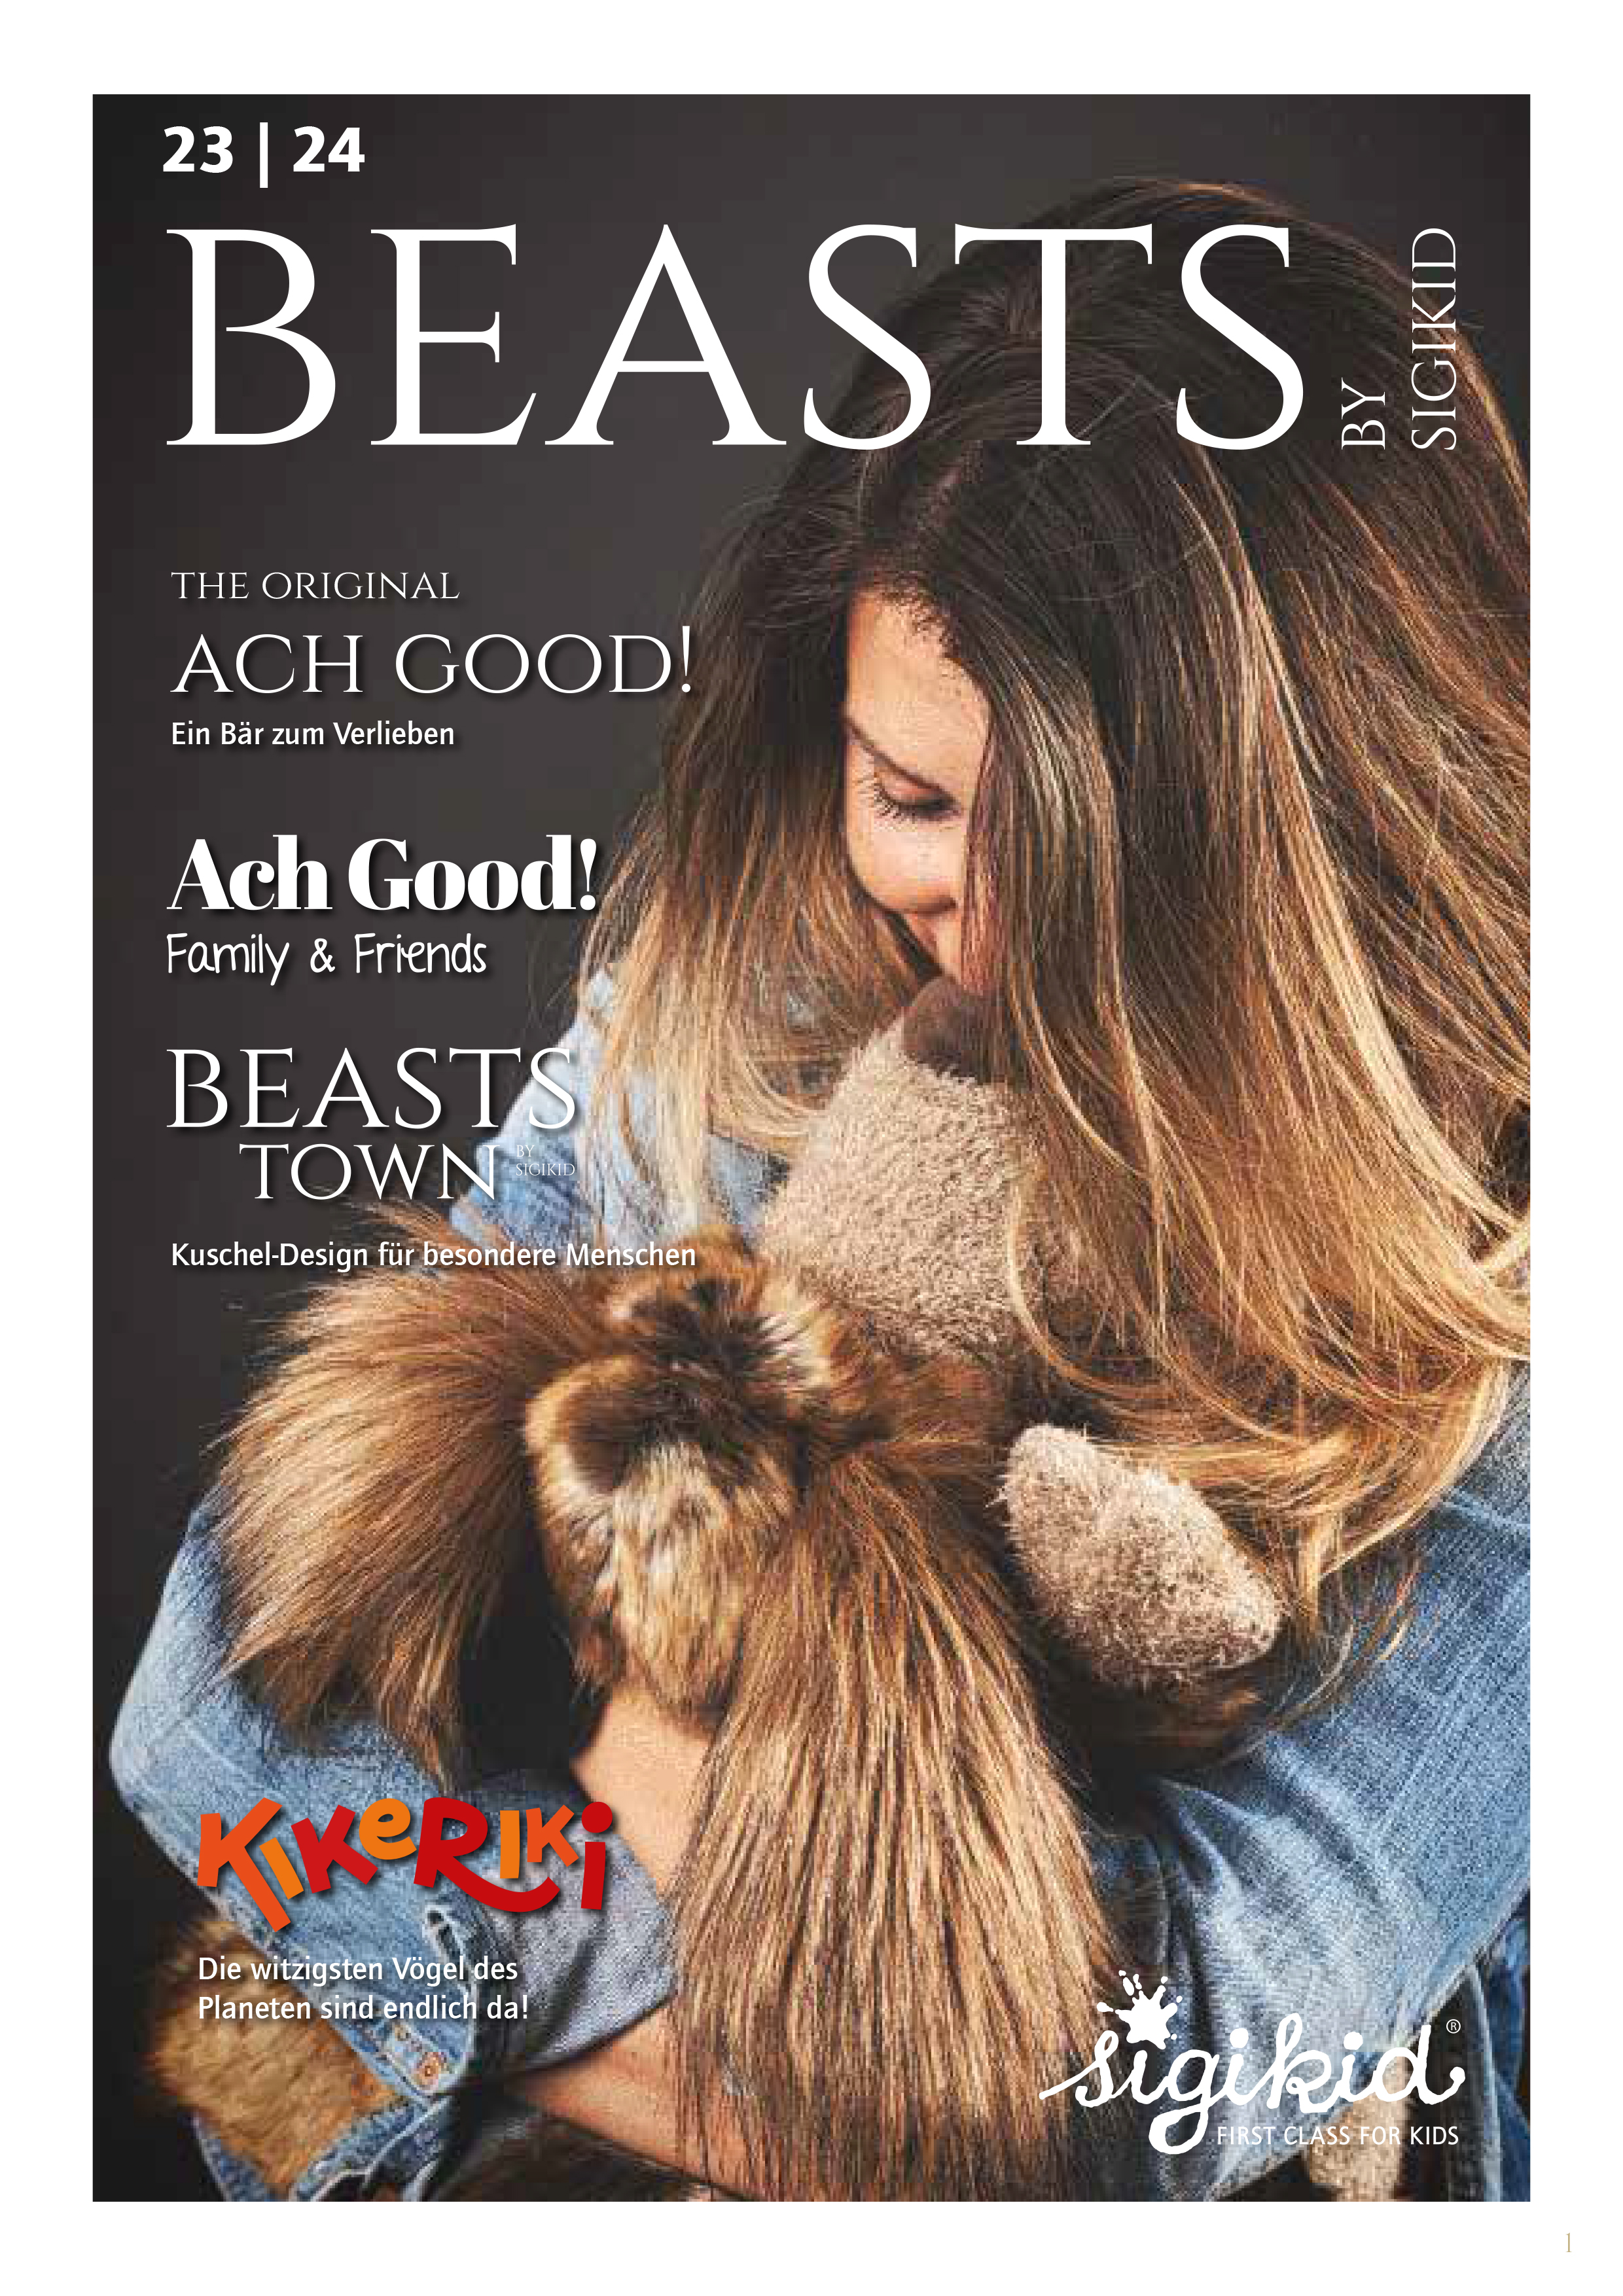 Katalog Beasts & Co 23/24